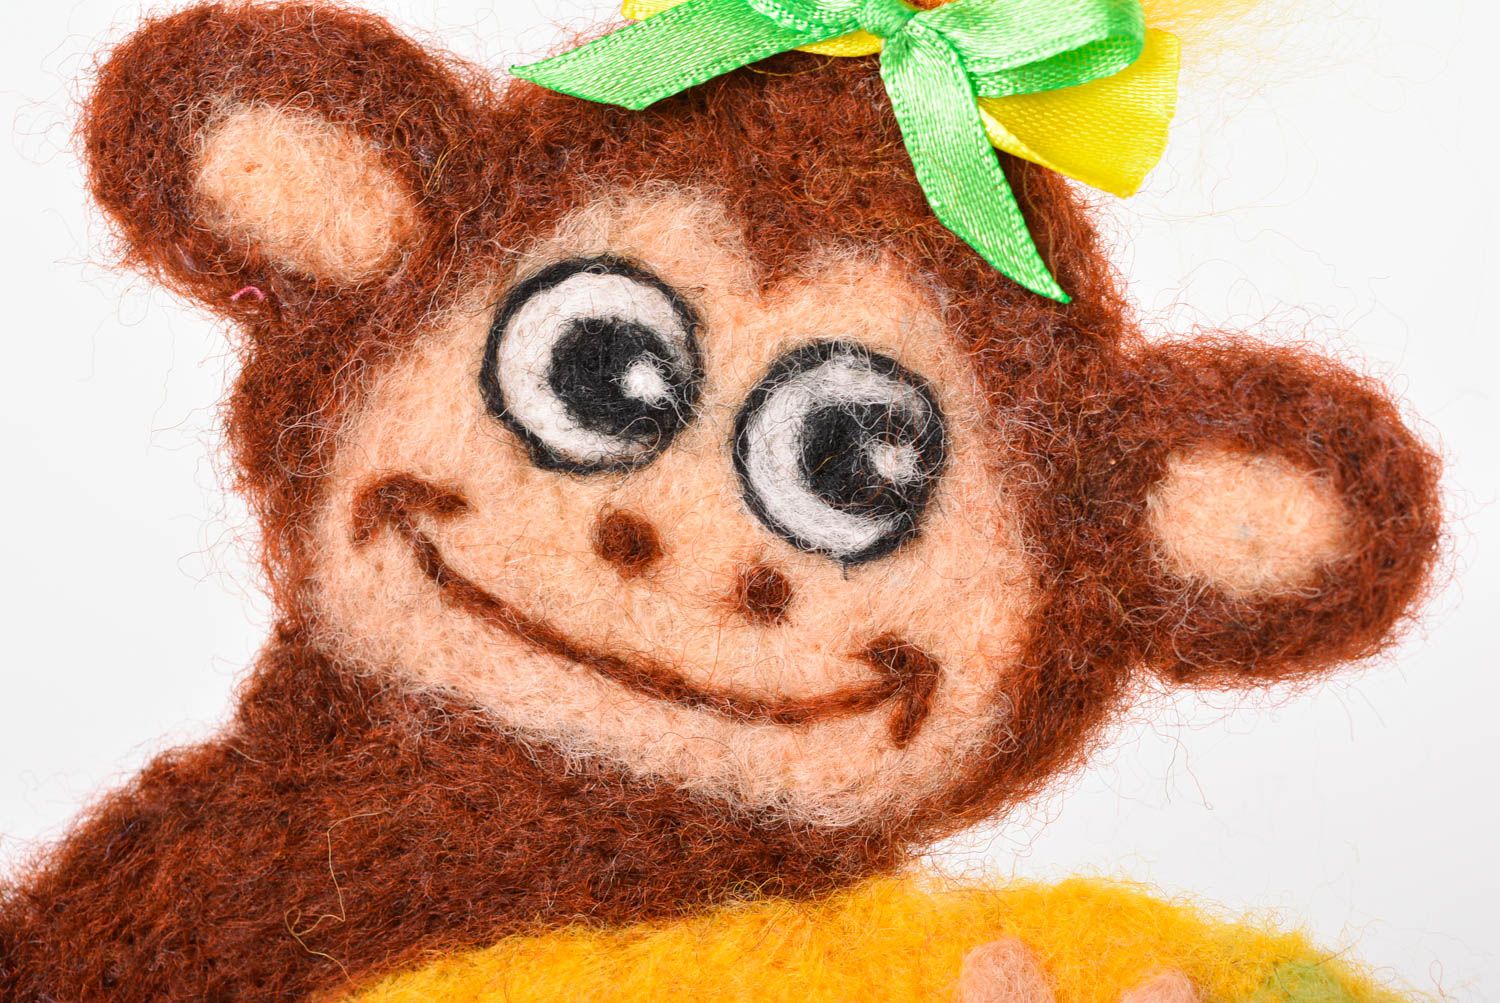 Imán de nevera con forma de mono gracioso regalo original elemento decorativo foto 4